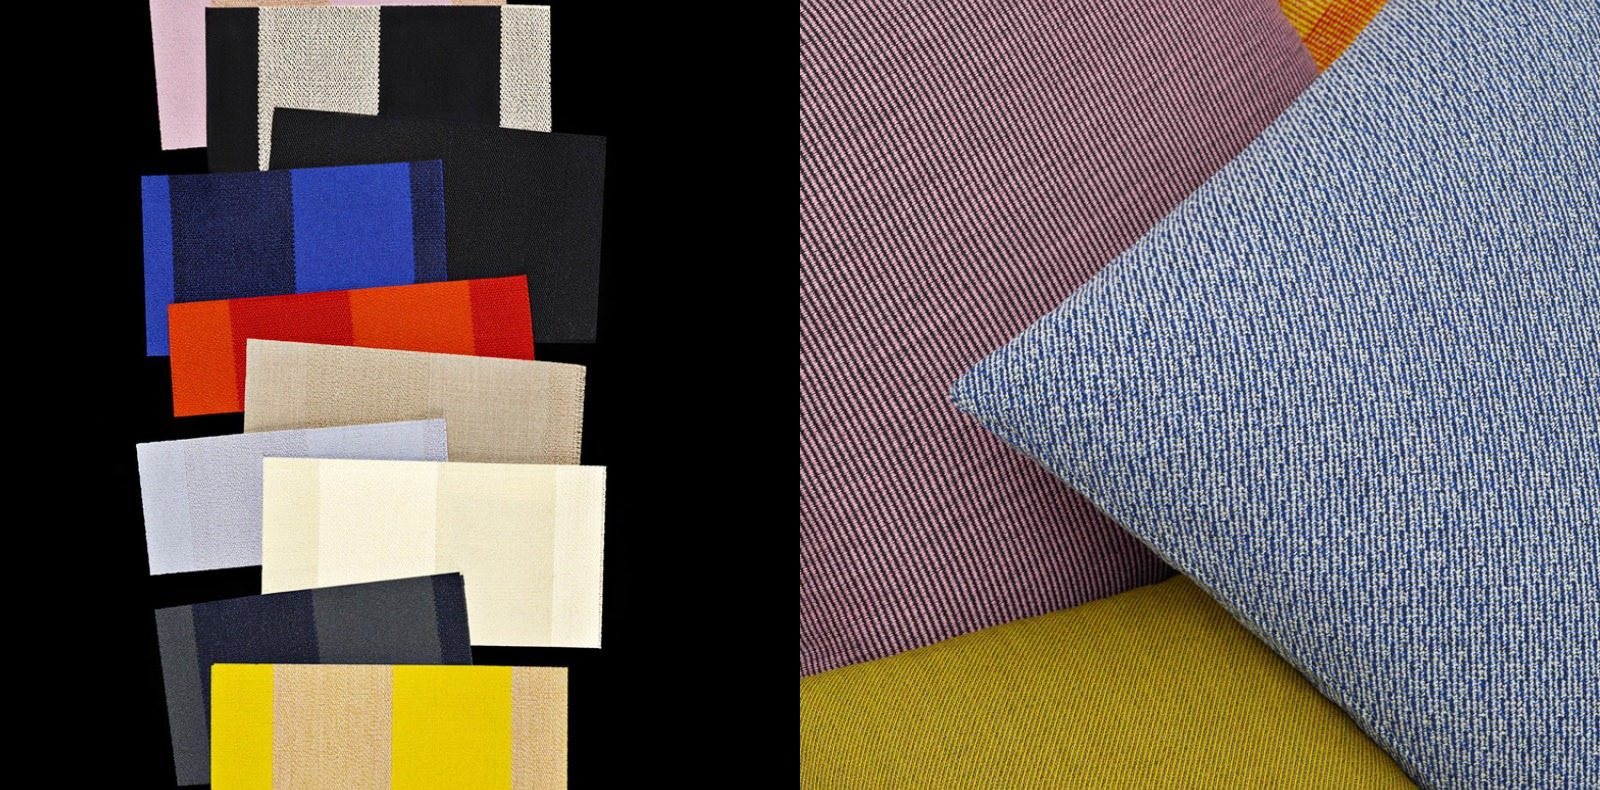  Raf Simons for Kvadrat fabric collections